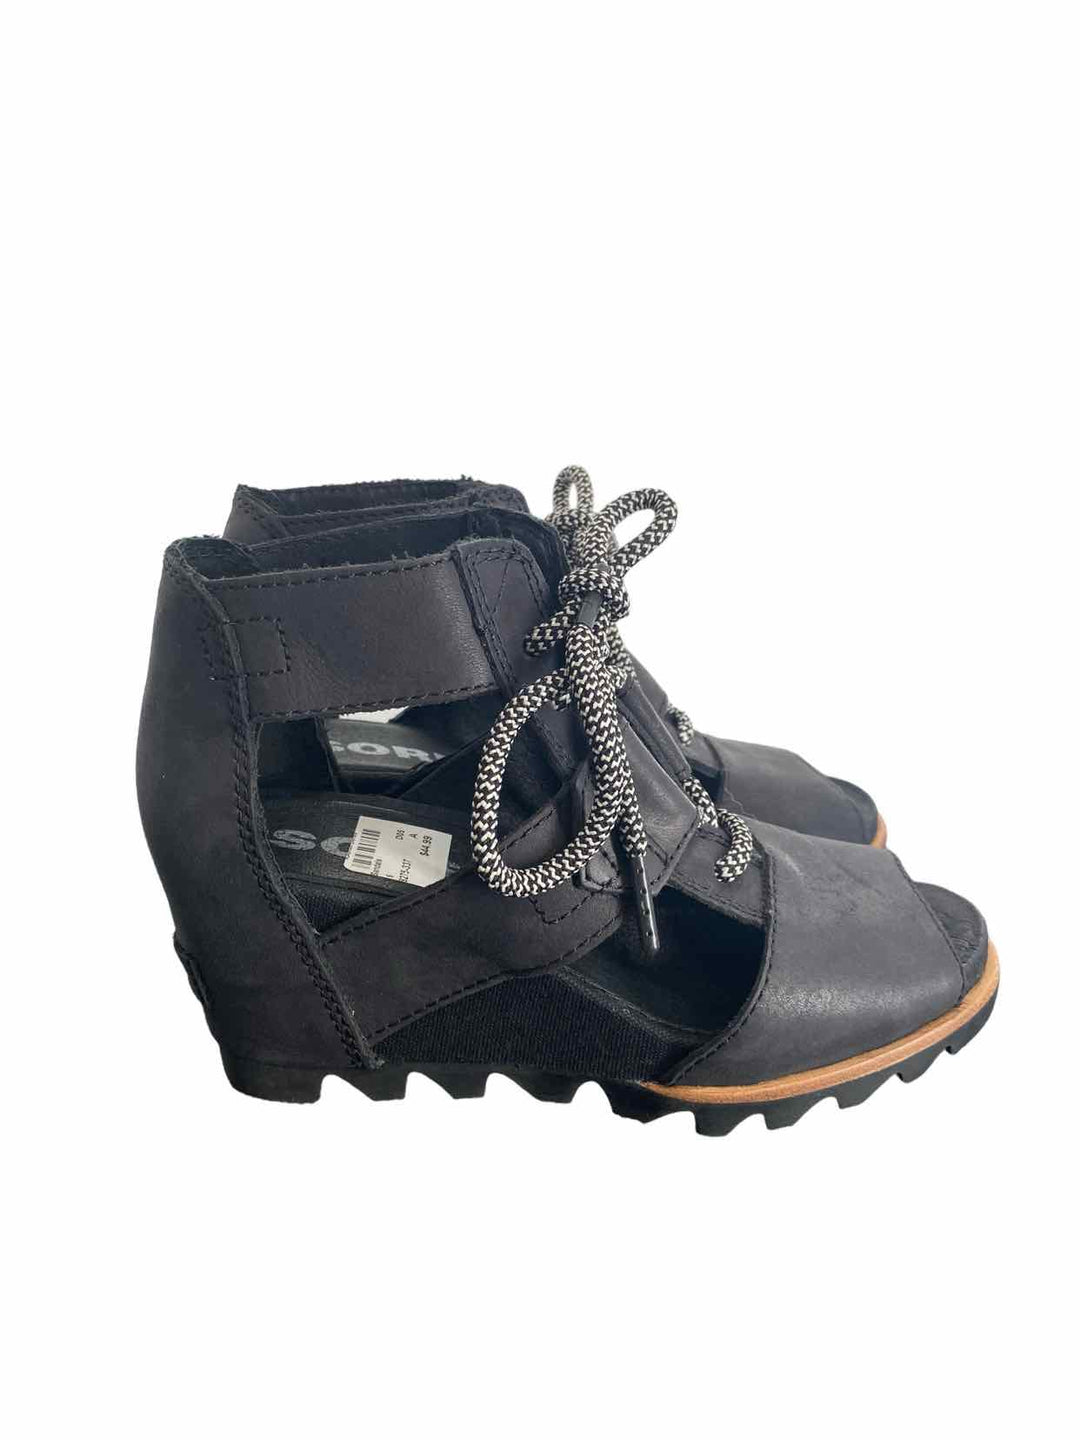 Sorel Shoe Size 6 Black Sandals